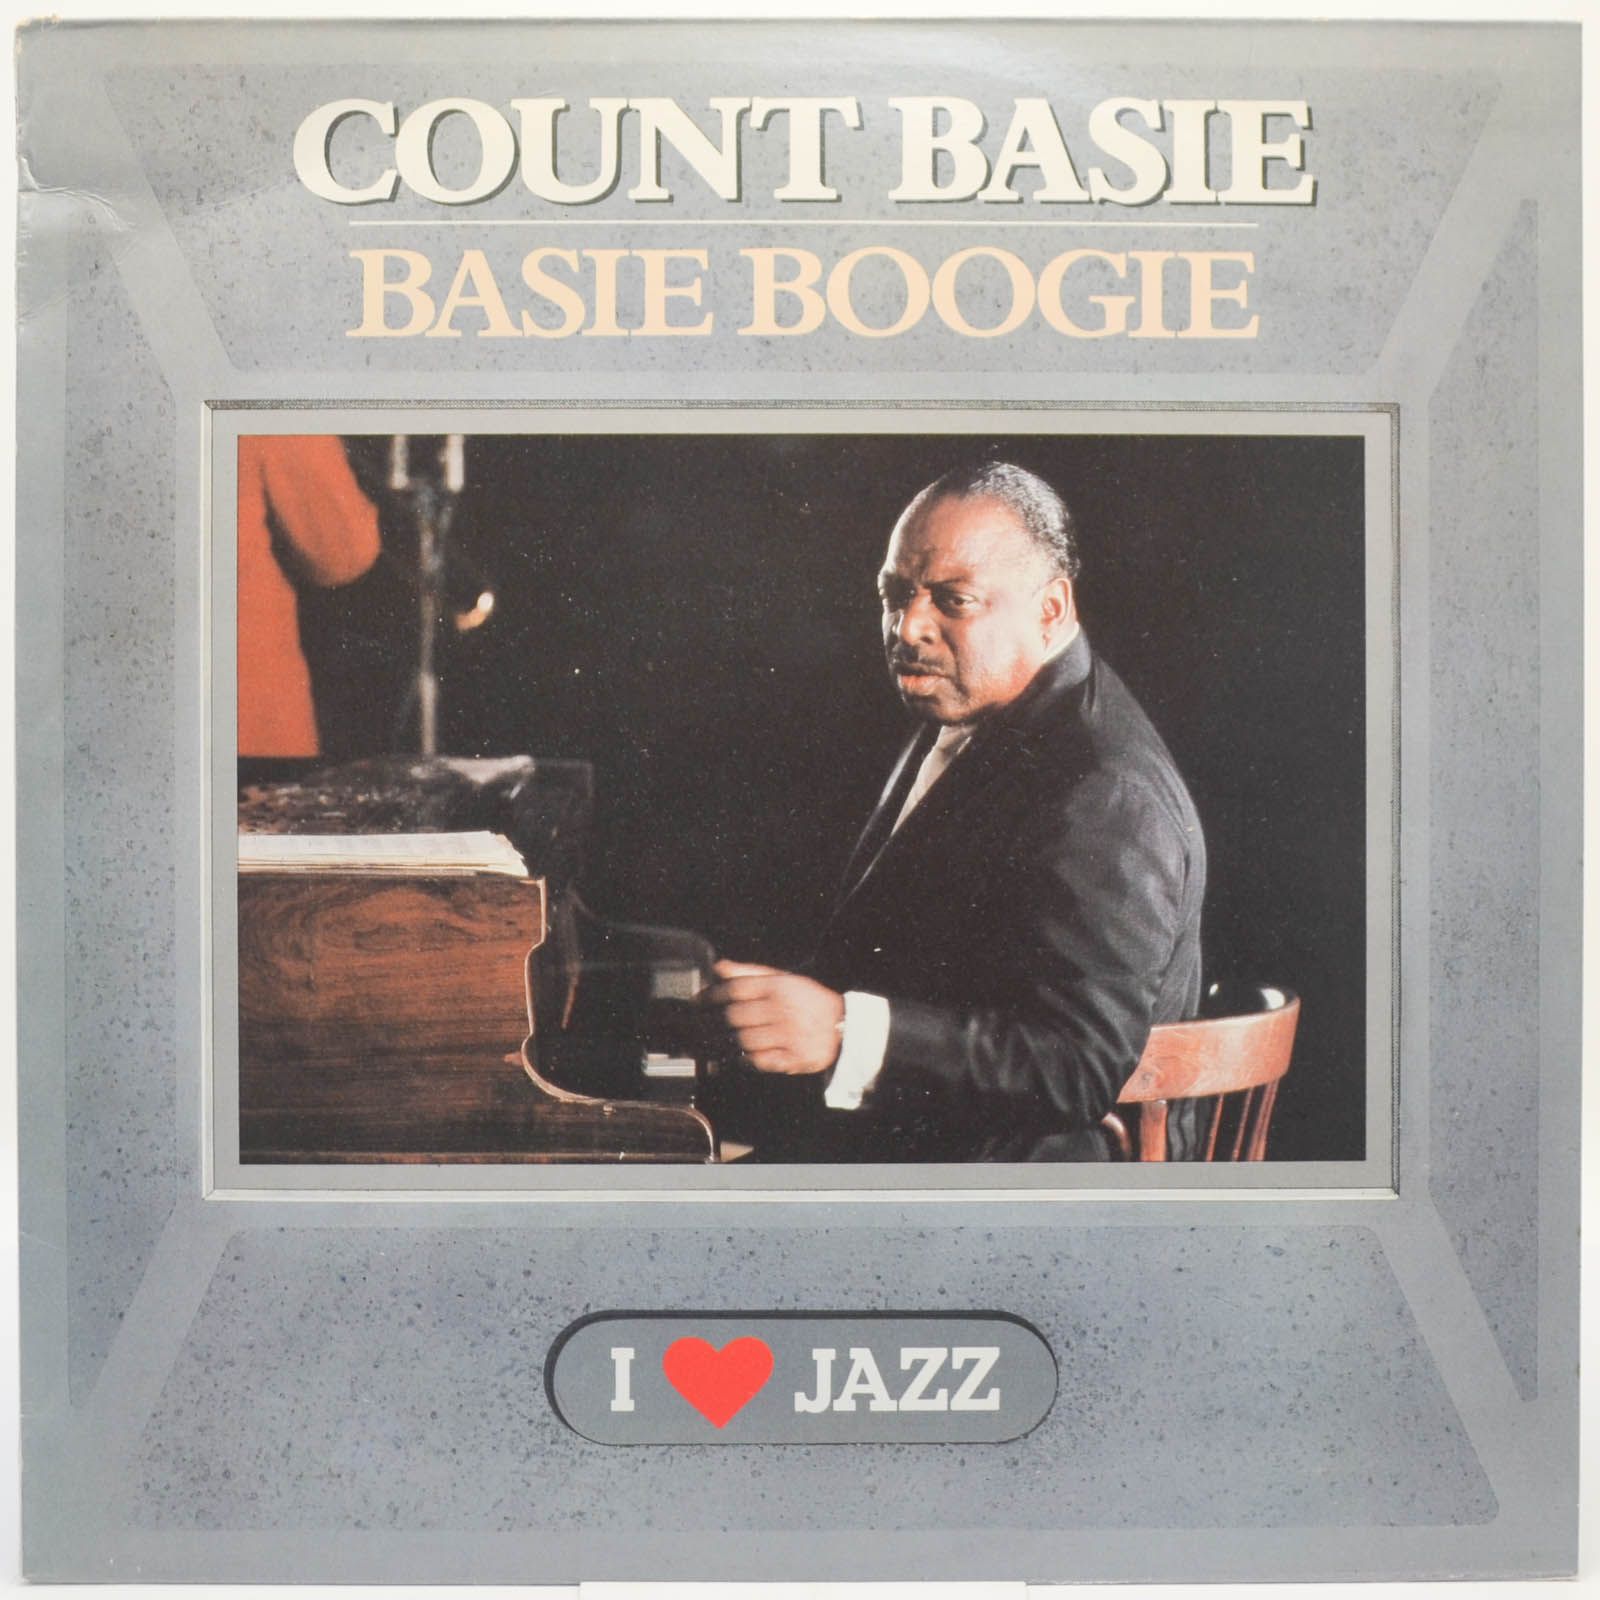 Count Basie — Basie Boogie, 1983